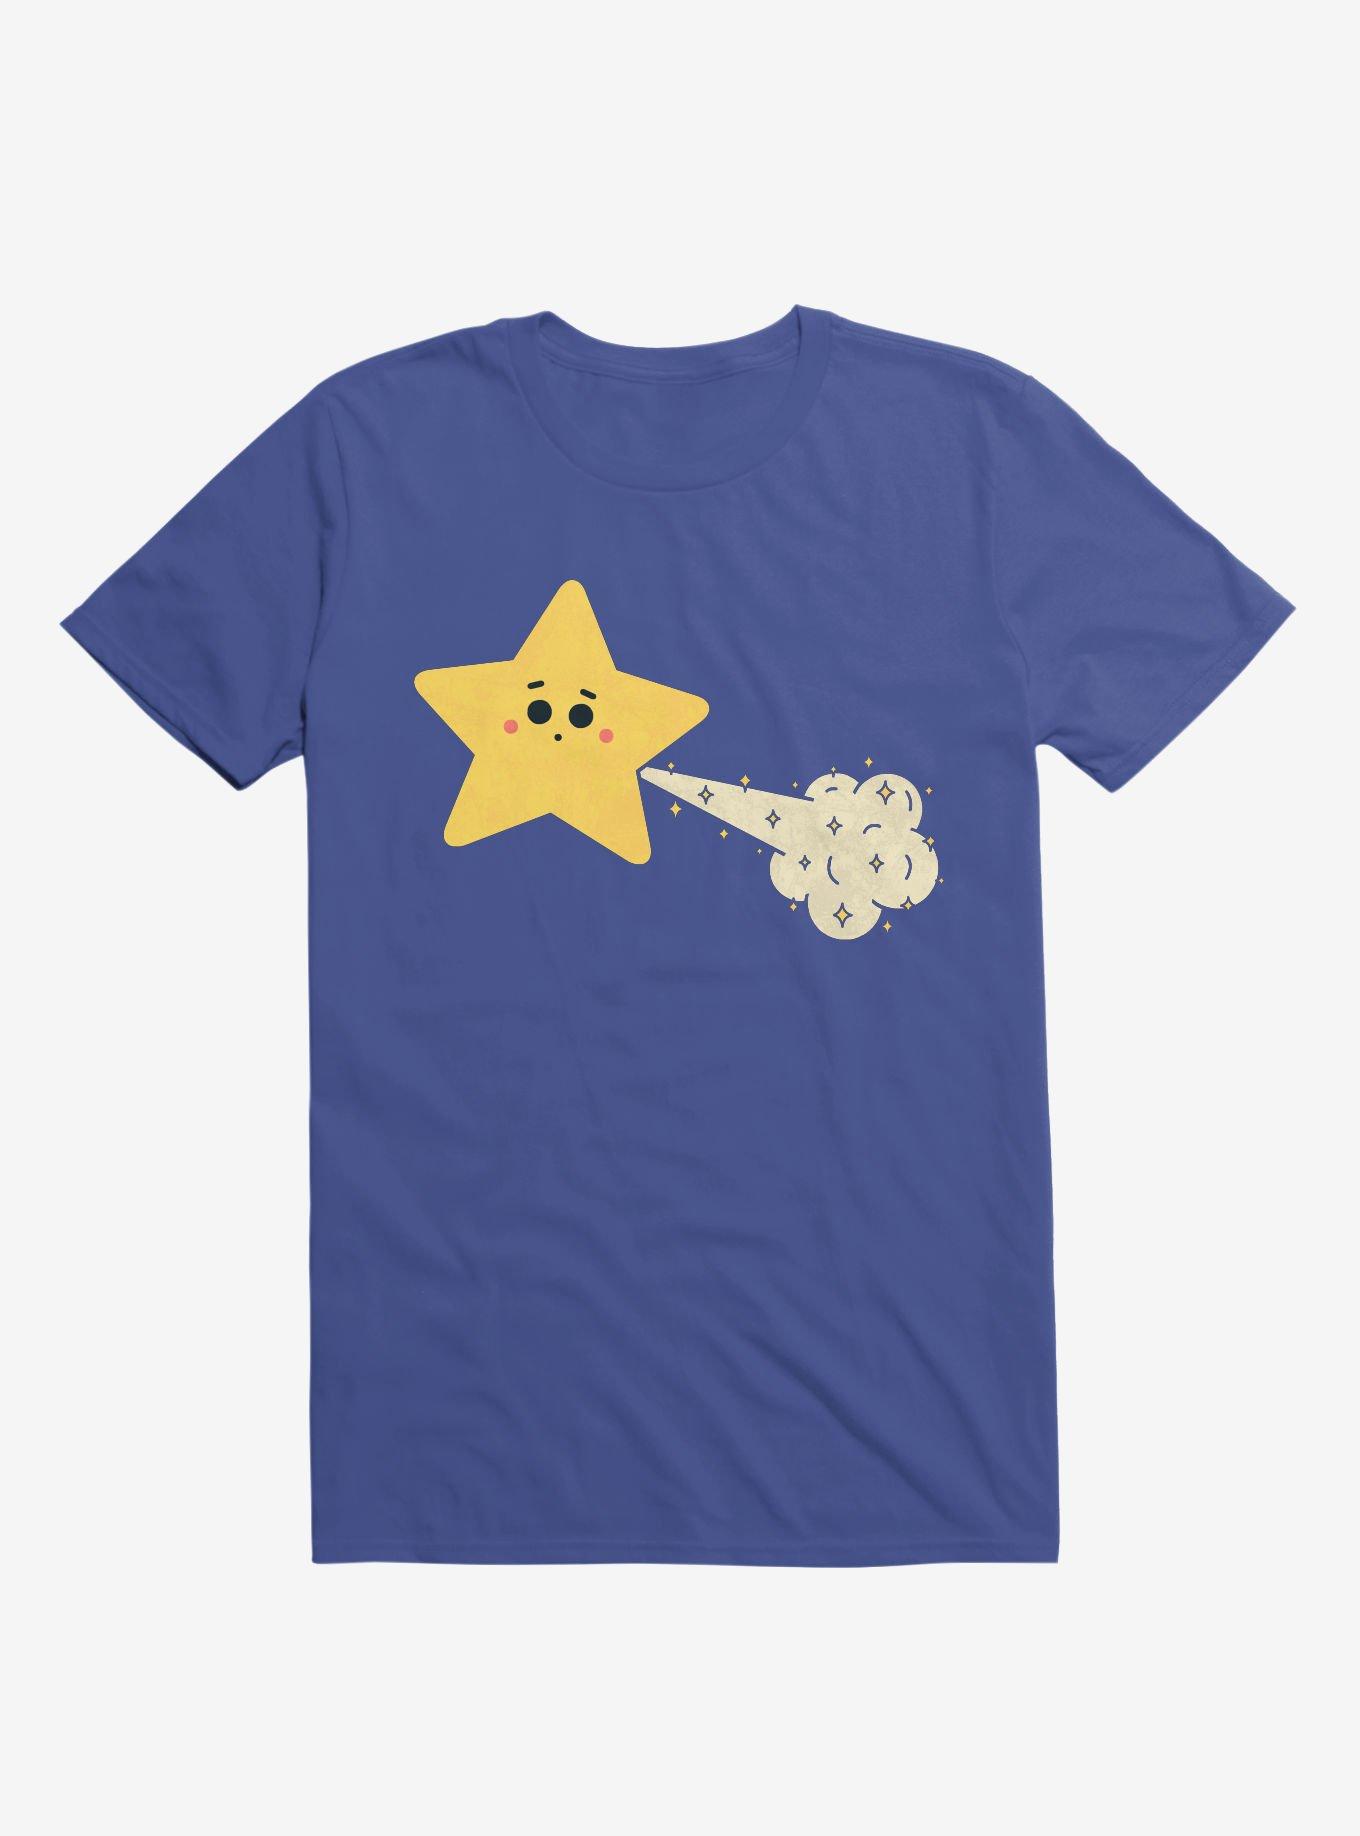 Sparkle Tooting Star Royal Blue T-Shirt, ROYAL, hi-res